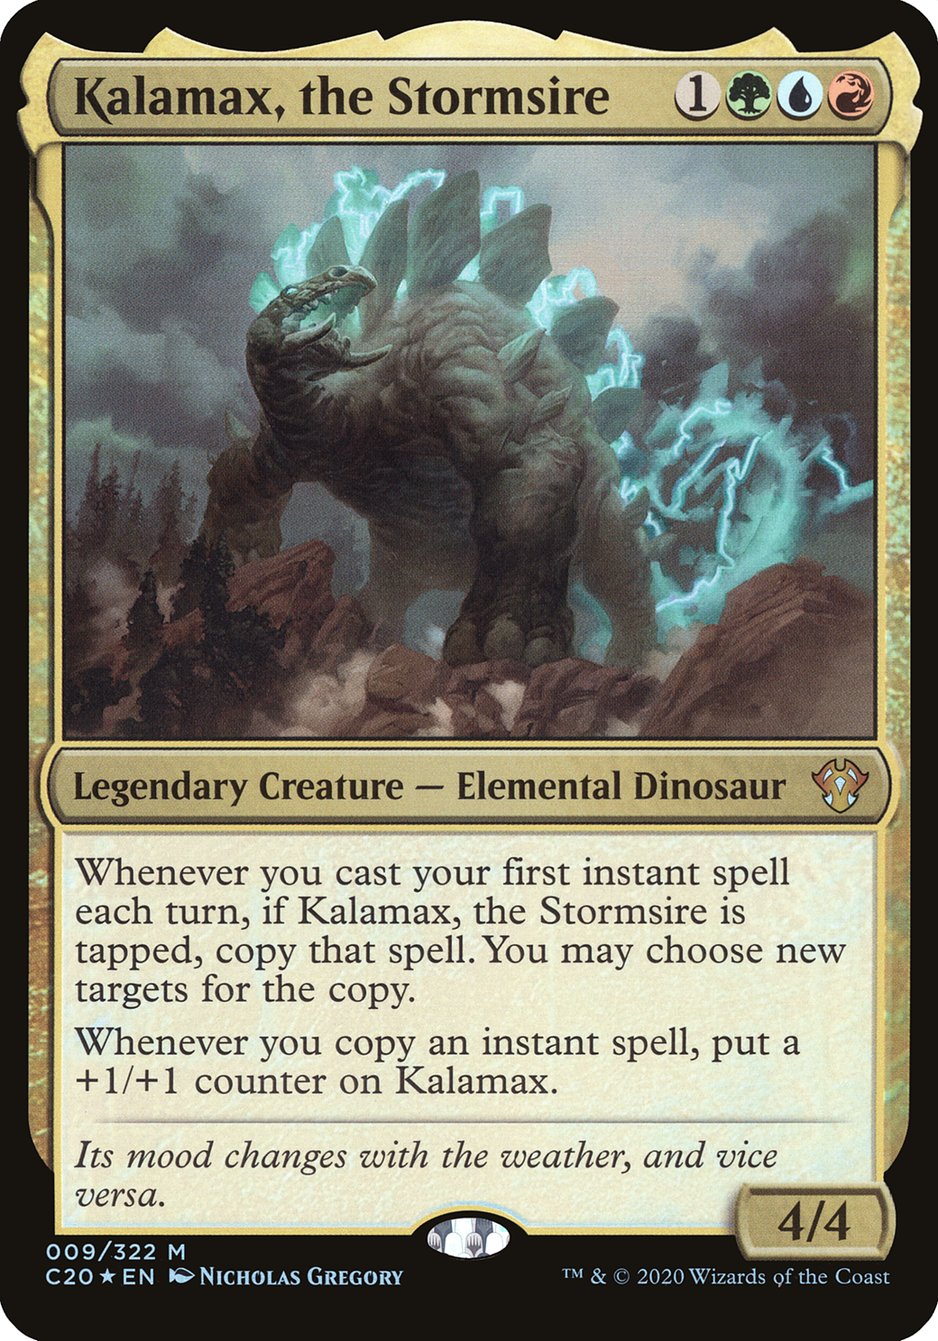 Kalamax, the Stormsire - MTG Card versions